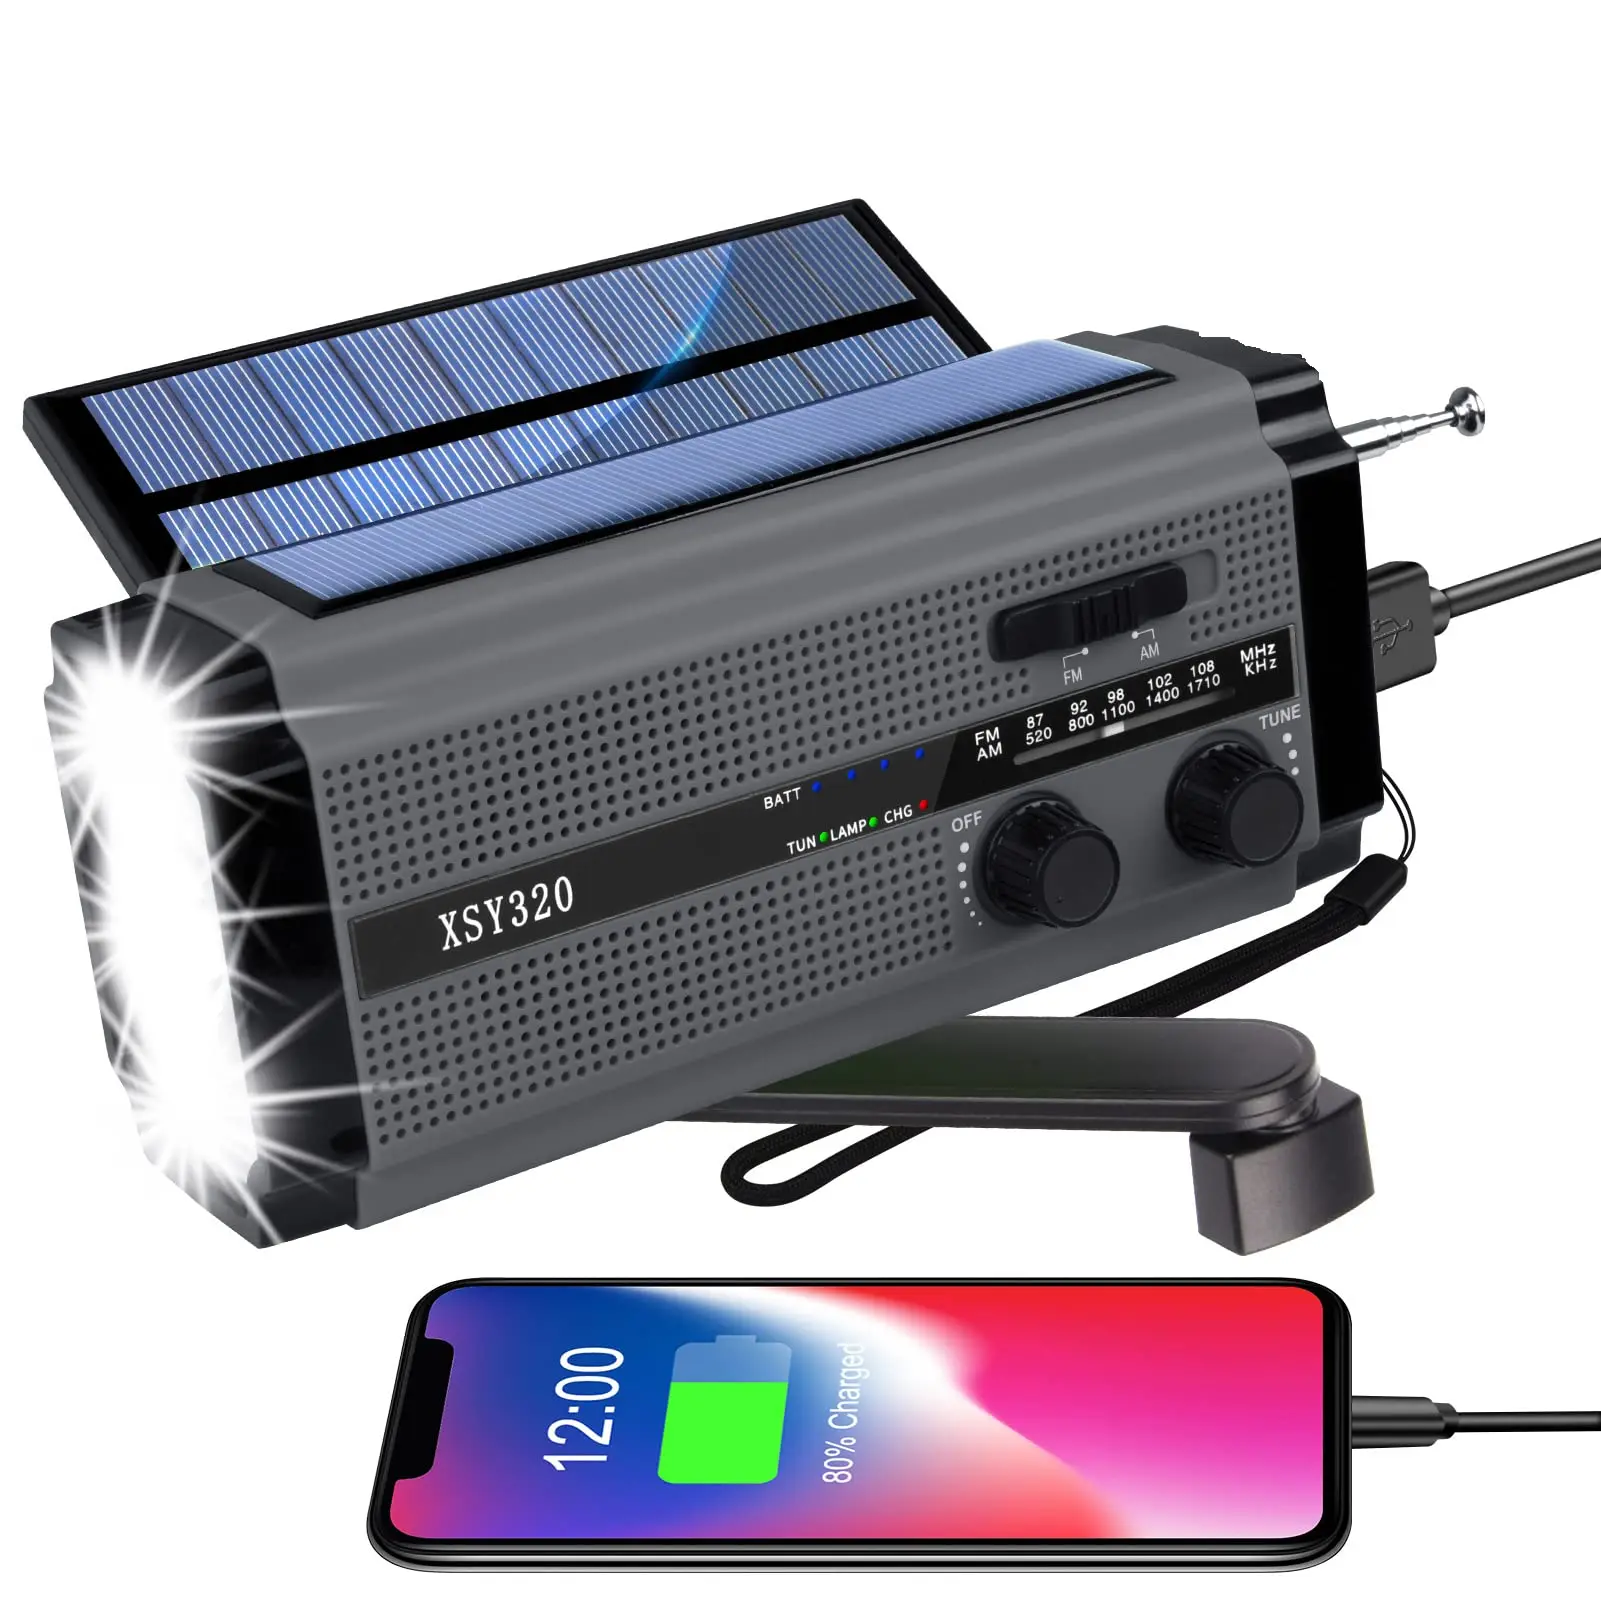 

2021 Newest Model 5000mah Portable Emergency Portable Am Fm Radio with Reading lamp, Hand Crank & Big Solar Panel, Customized